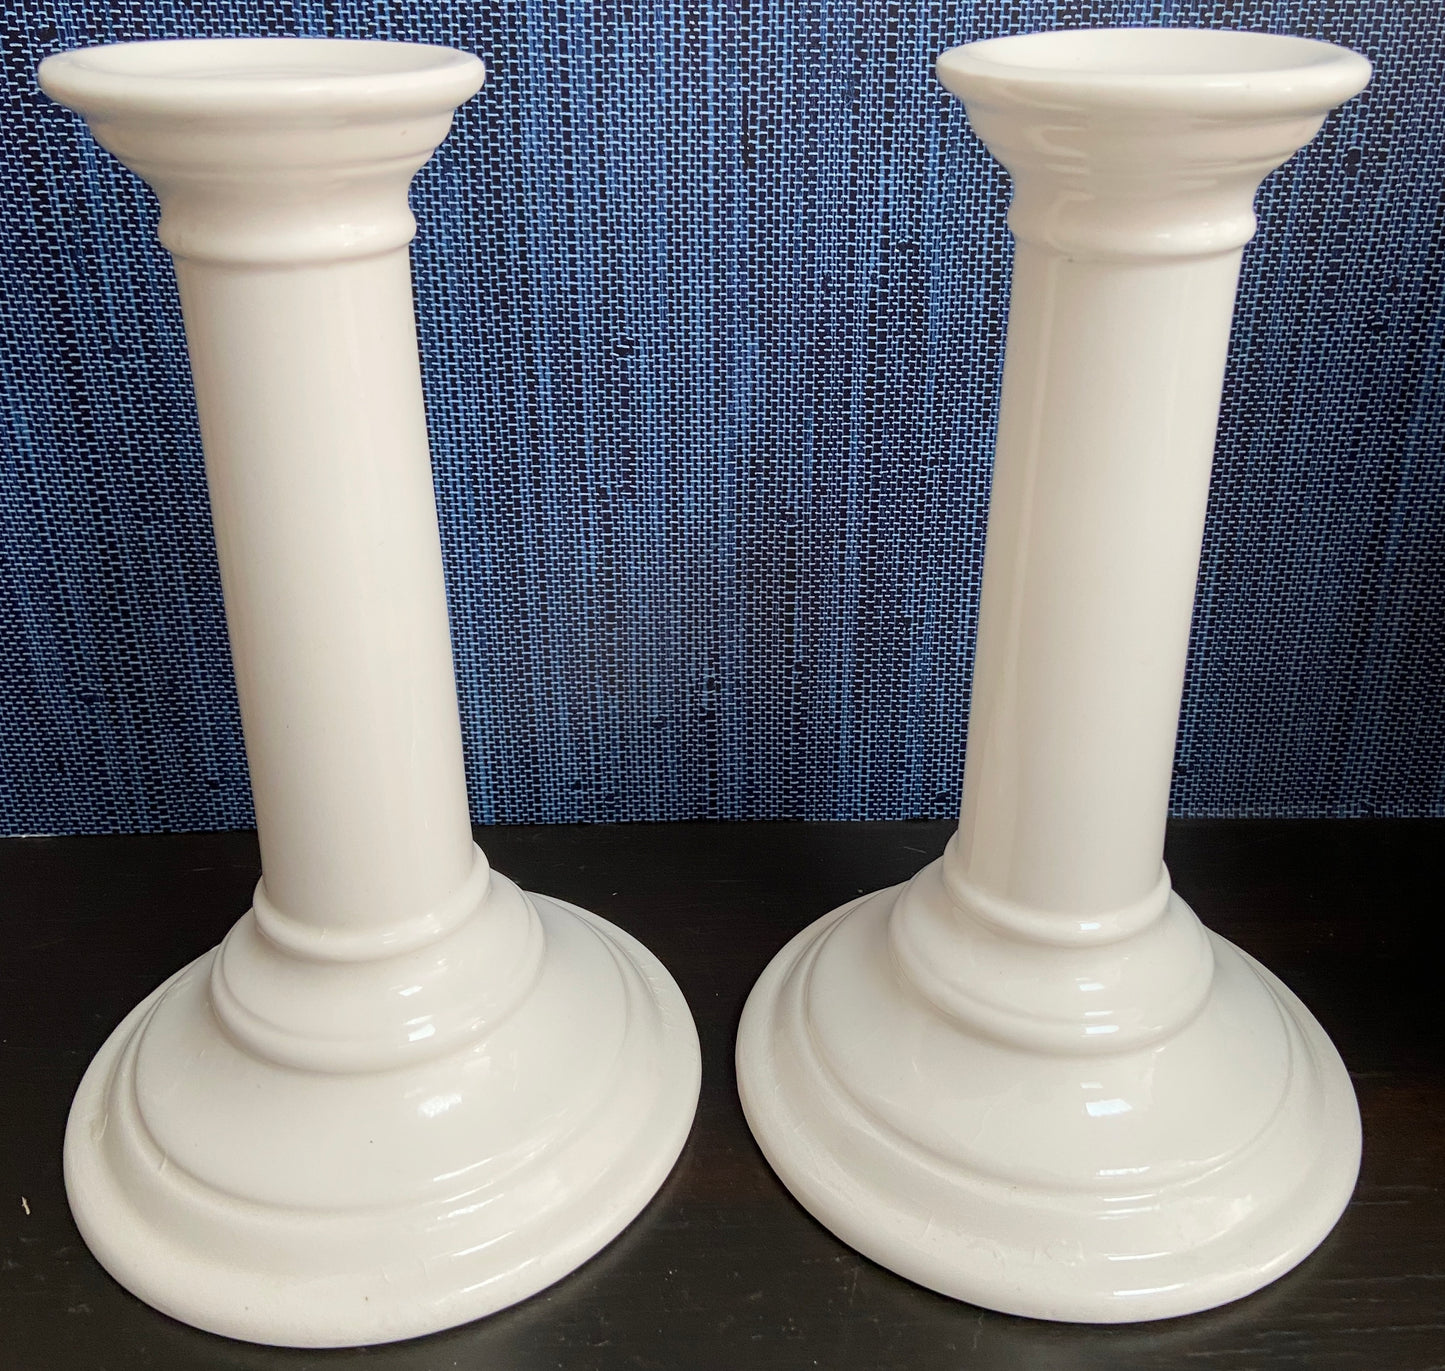 Tiffany & Co White Ceramic Candlesticks, 8.5ʺH x 5" D - Excellent!